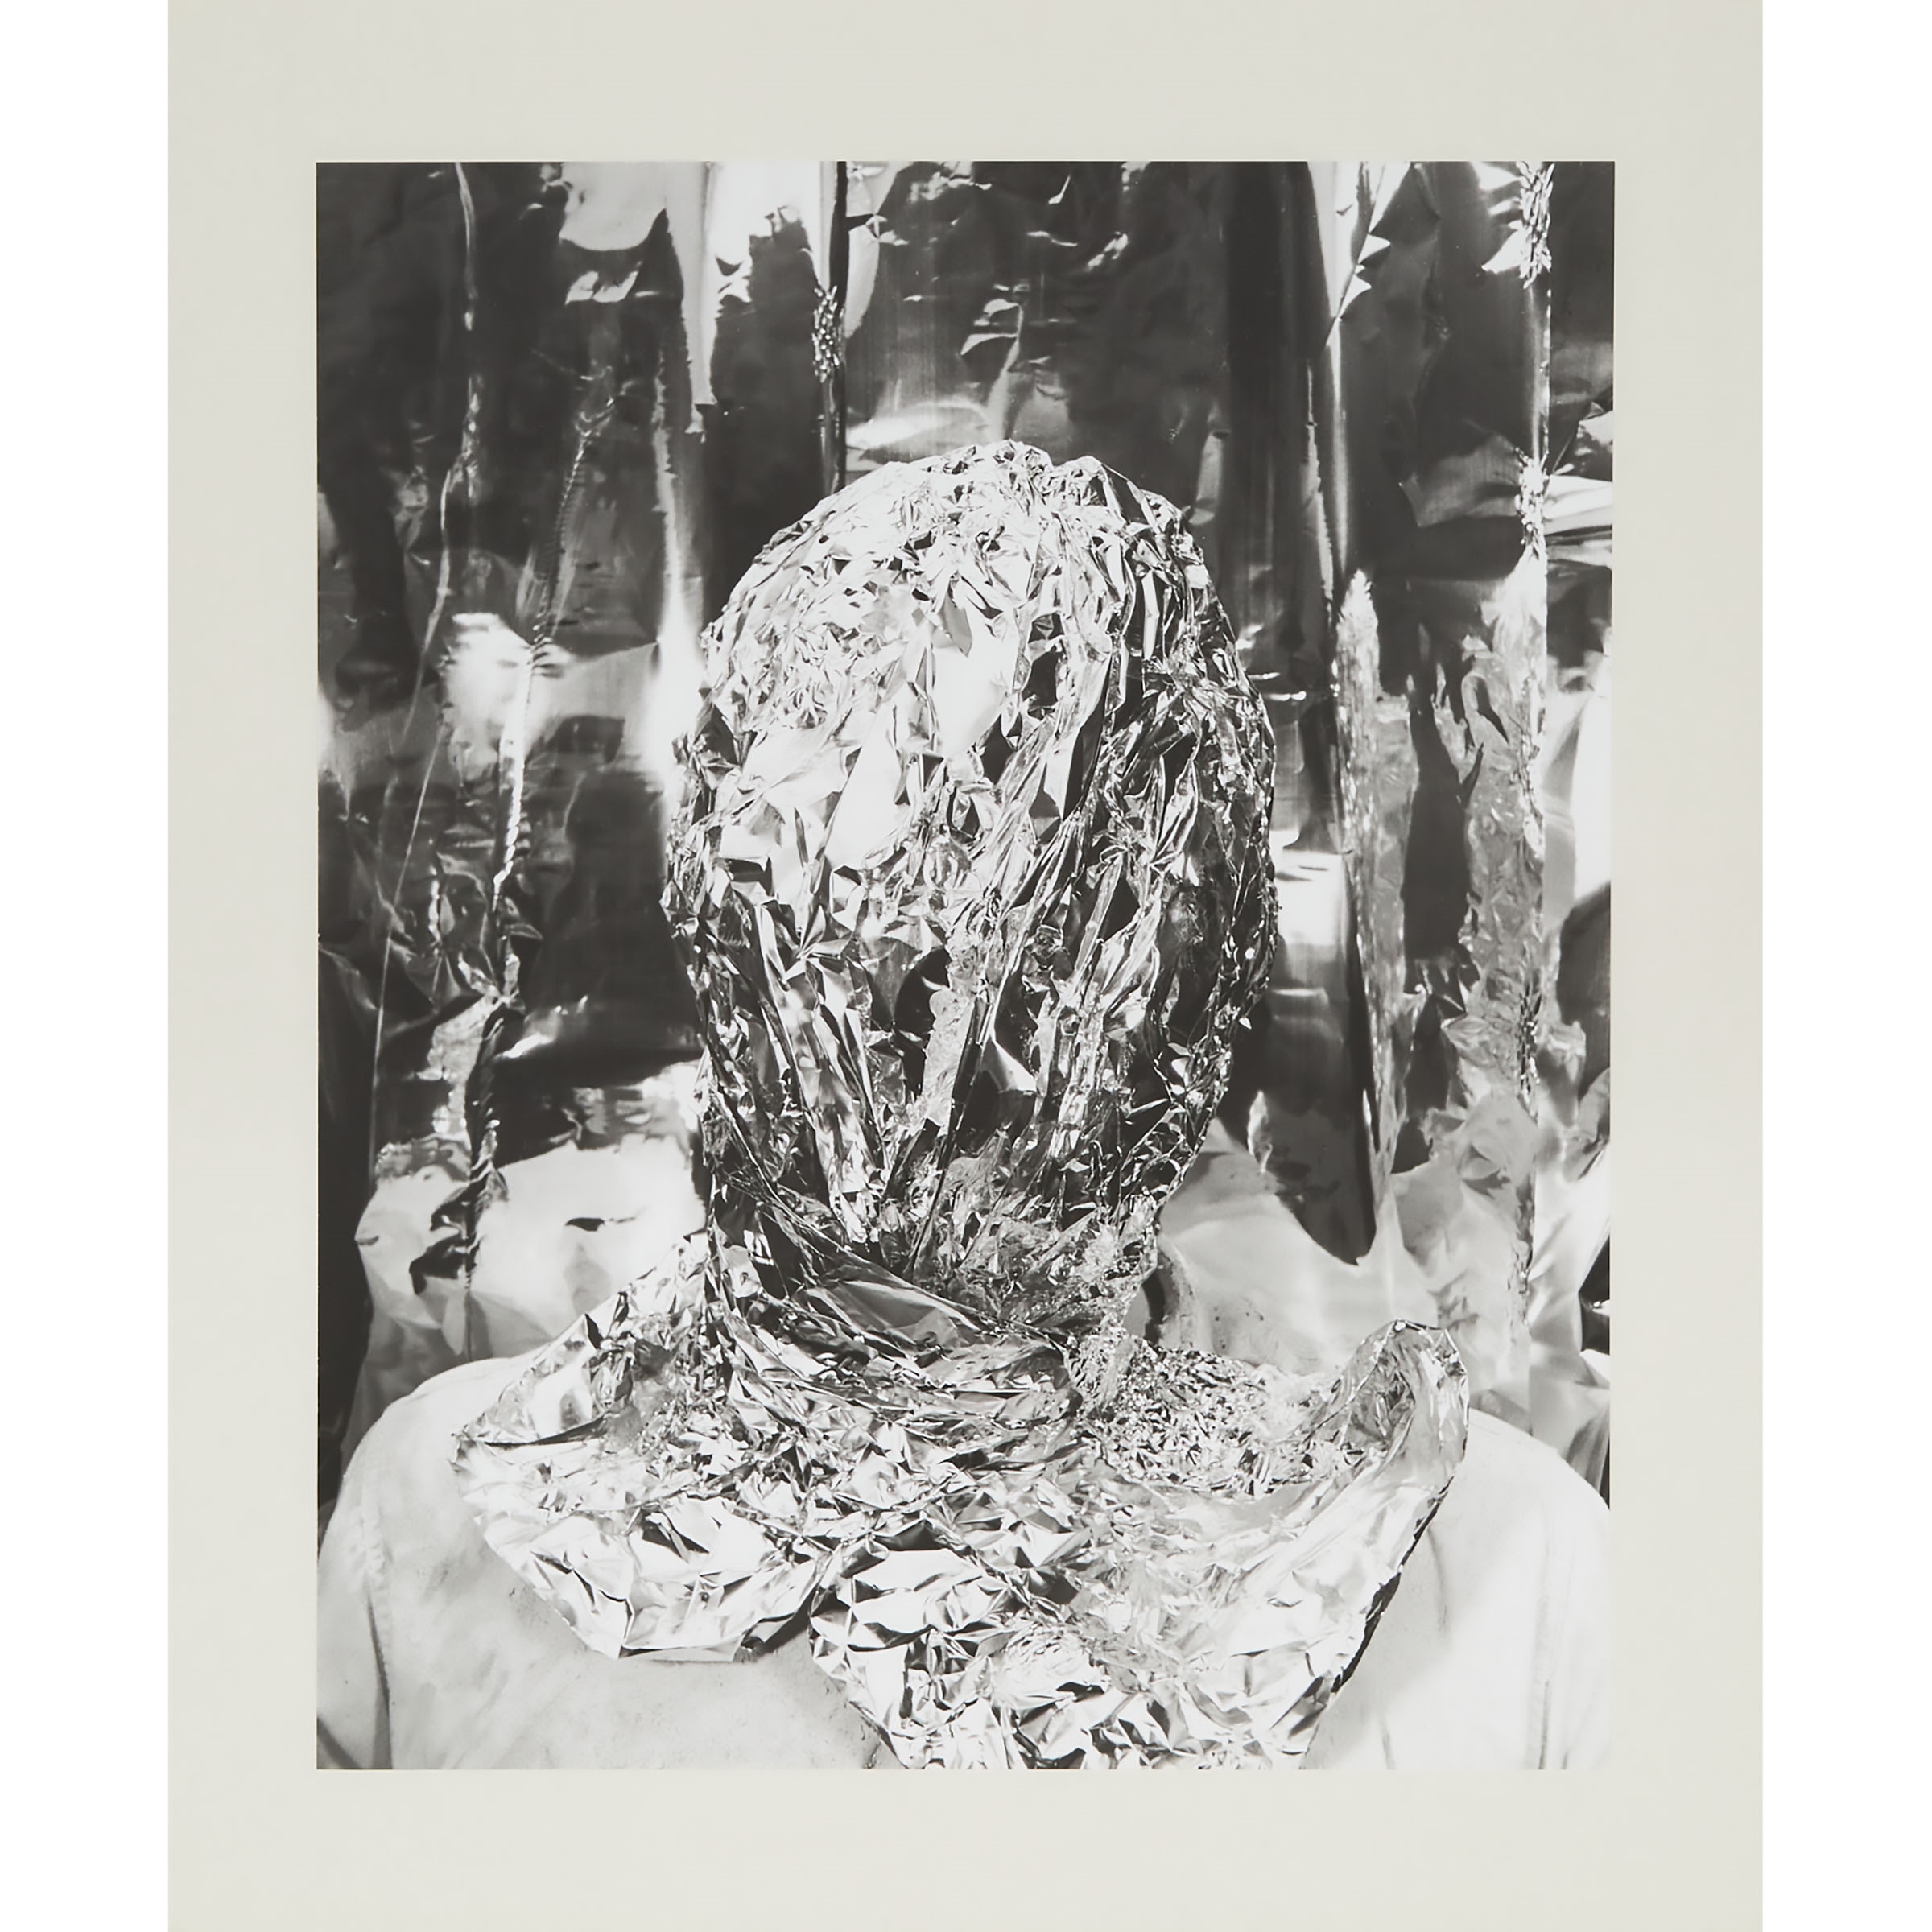 Artwork by Günter Brus, SELBSTBEMALUNG II (SELF PORTRAIT), 1964-1984, Made of gelatin silver prints